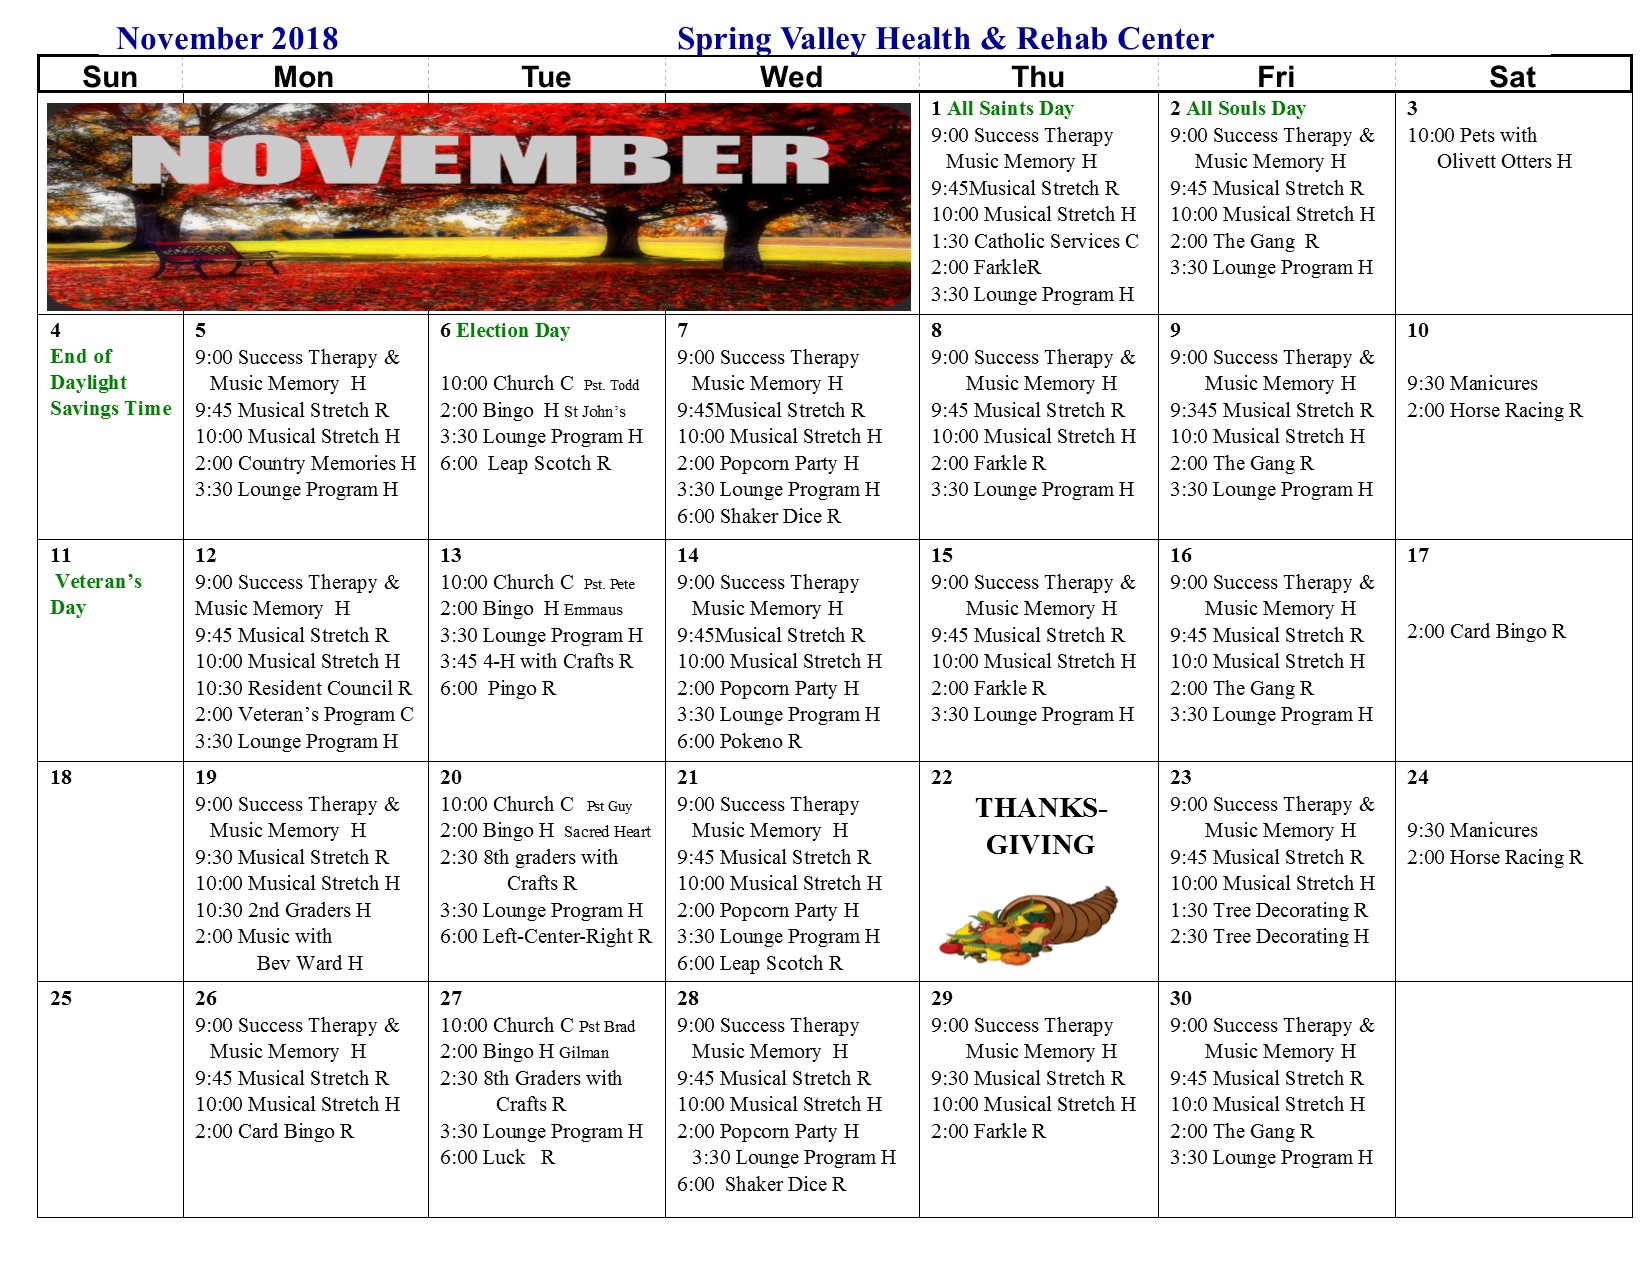 November Activity Calendar Spring Valley Senior Living and Health